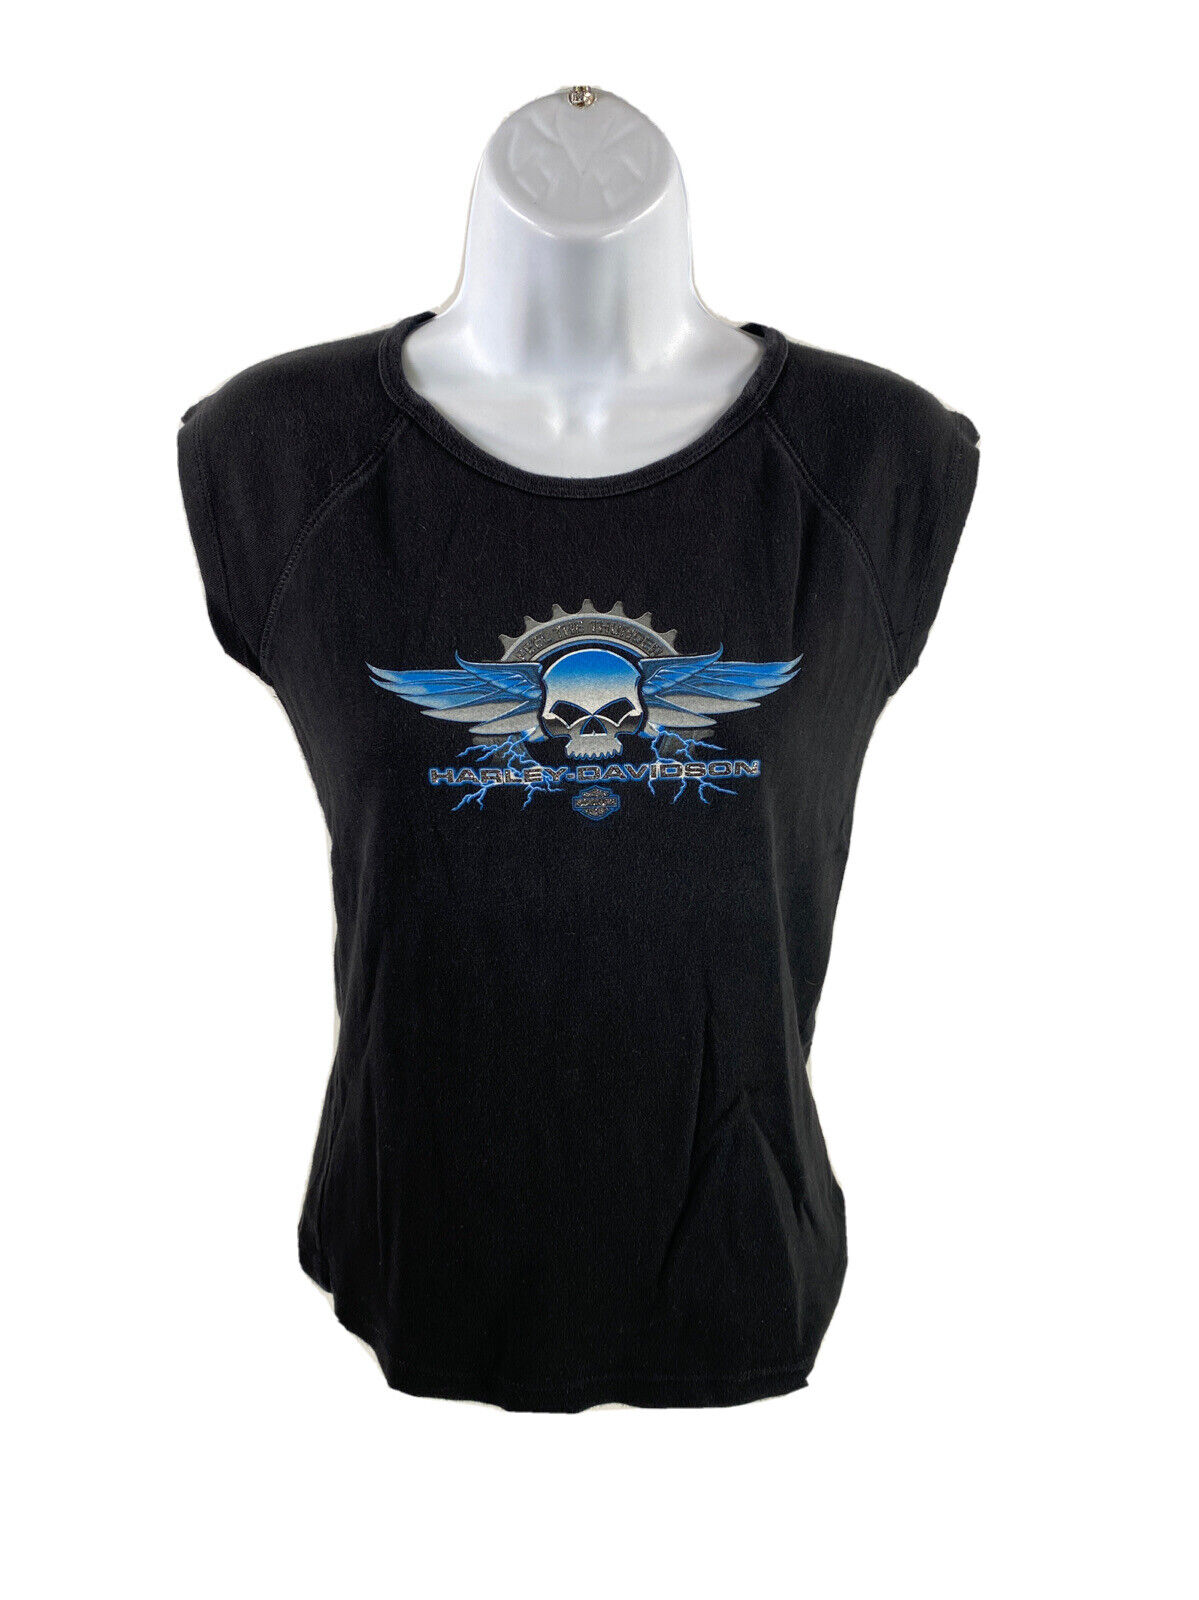 Harley Davidson Women's Black Cement City, MI Cap Sleeve T-Shirt - L